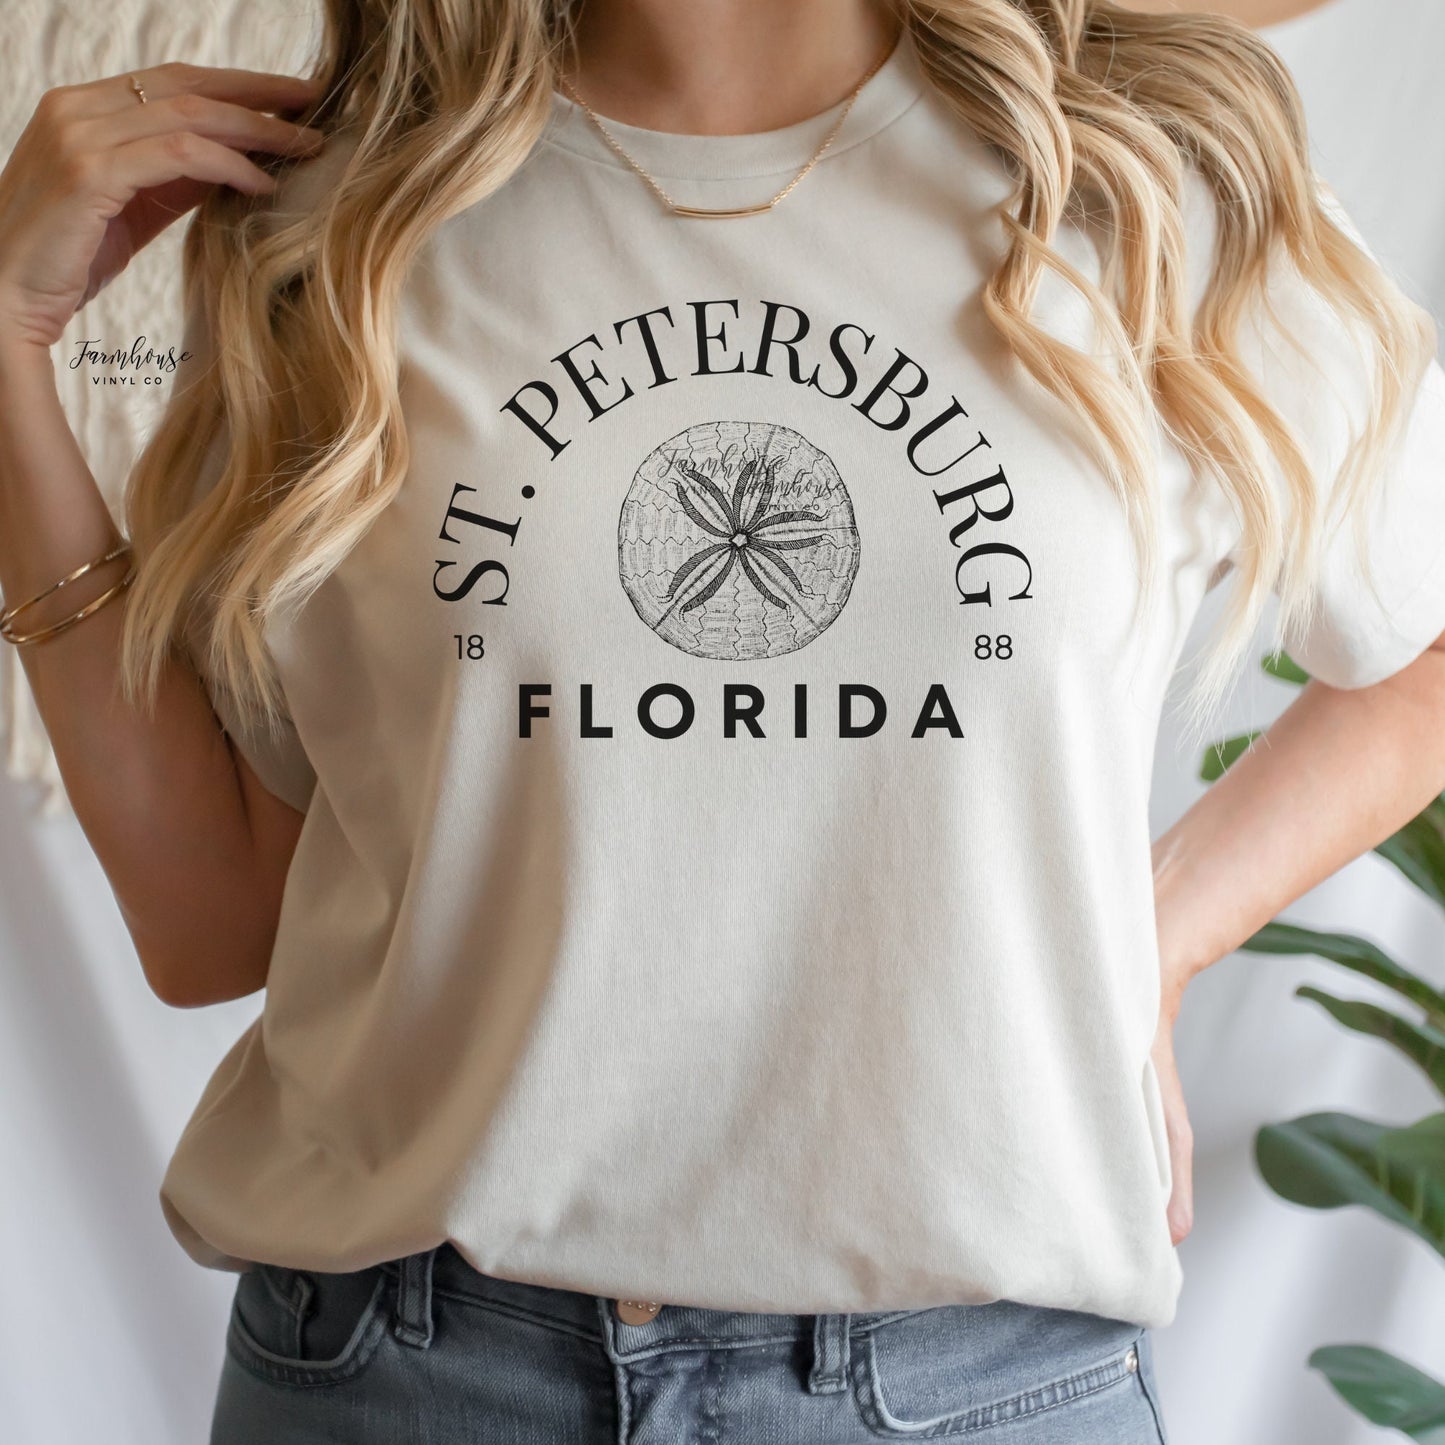 St. Petersburg Florida Sand Dollar Shirt - Farmhouse Vinyl Co